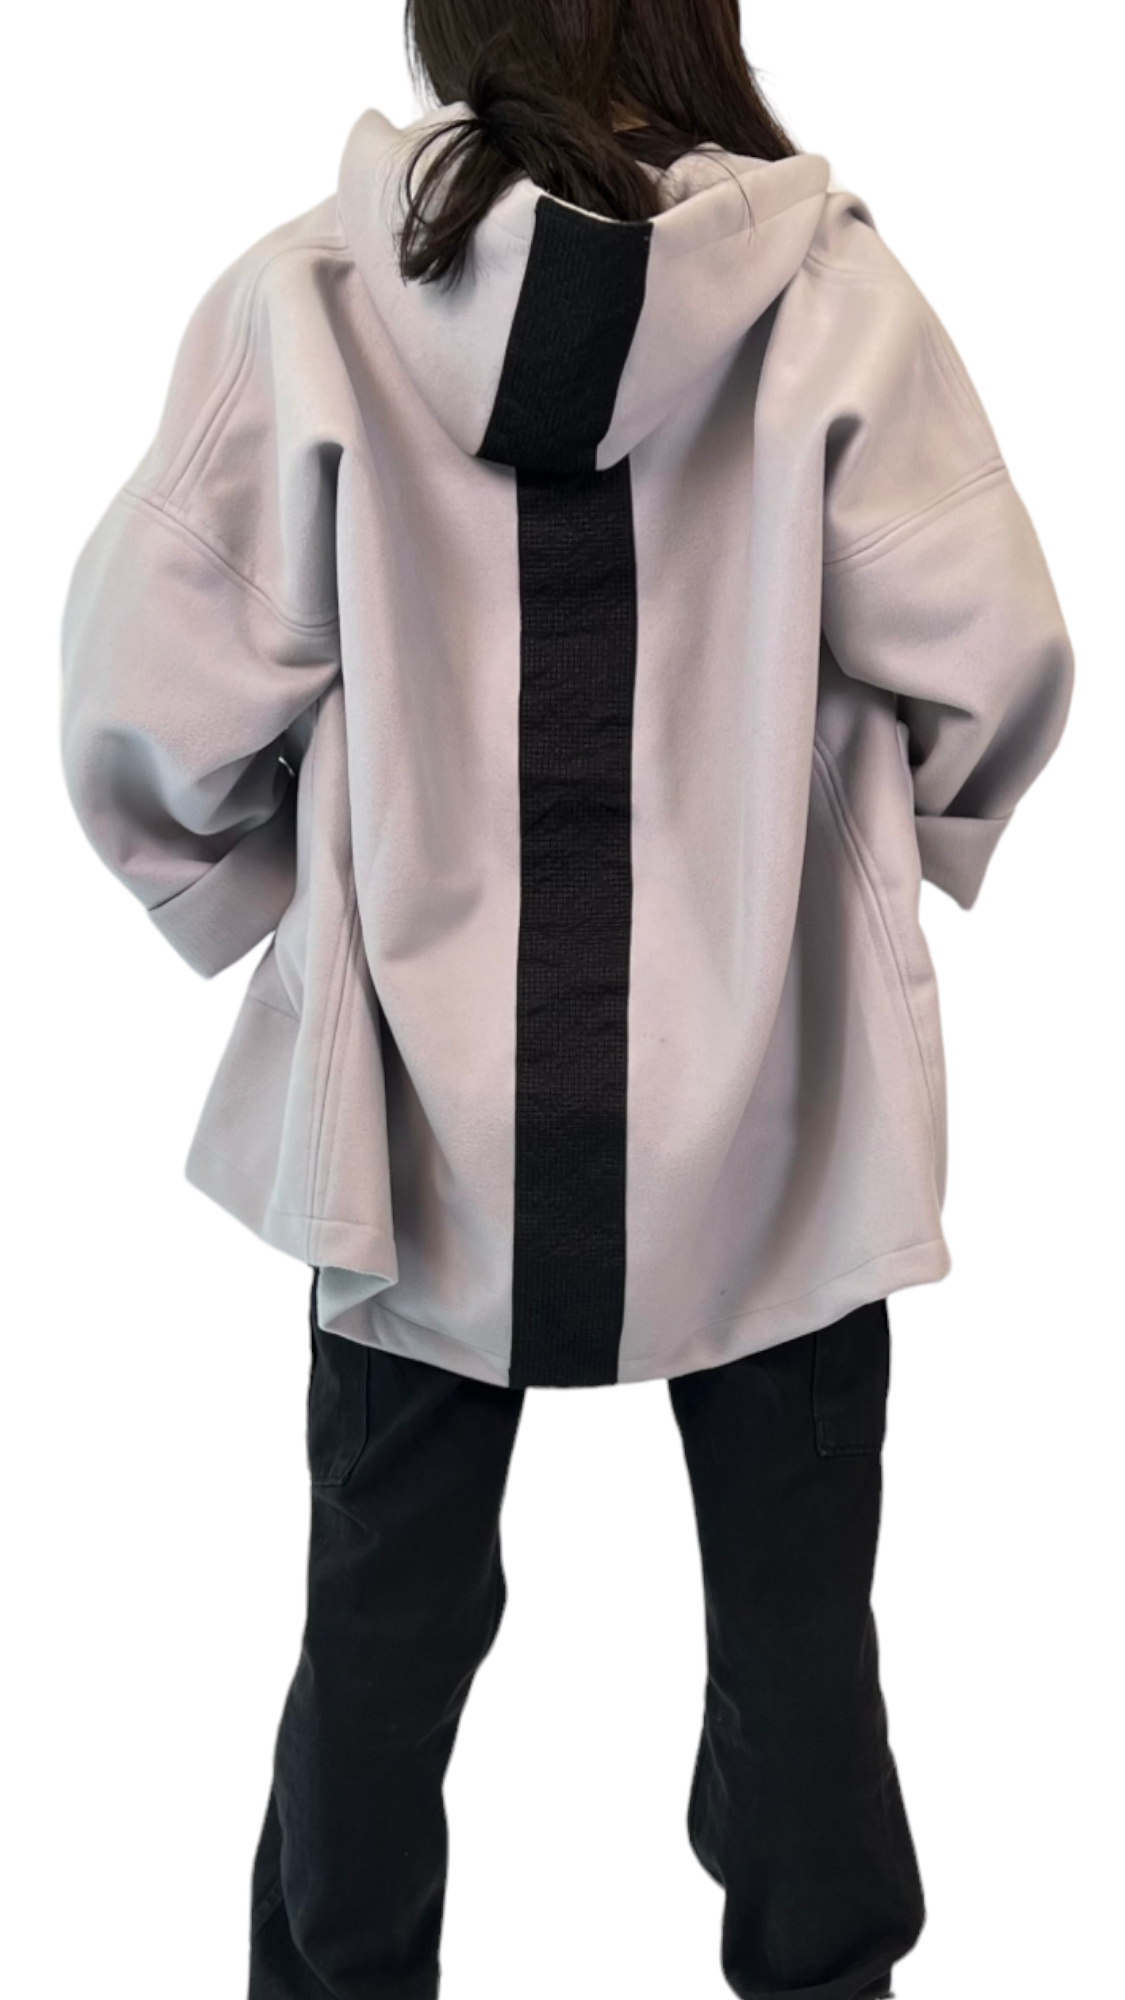 Light grey Jacket with Black Stripe